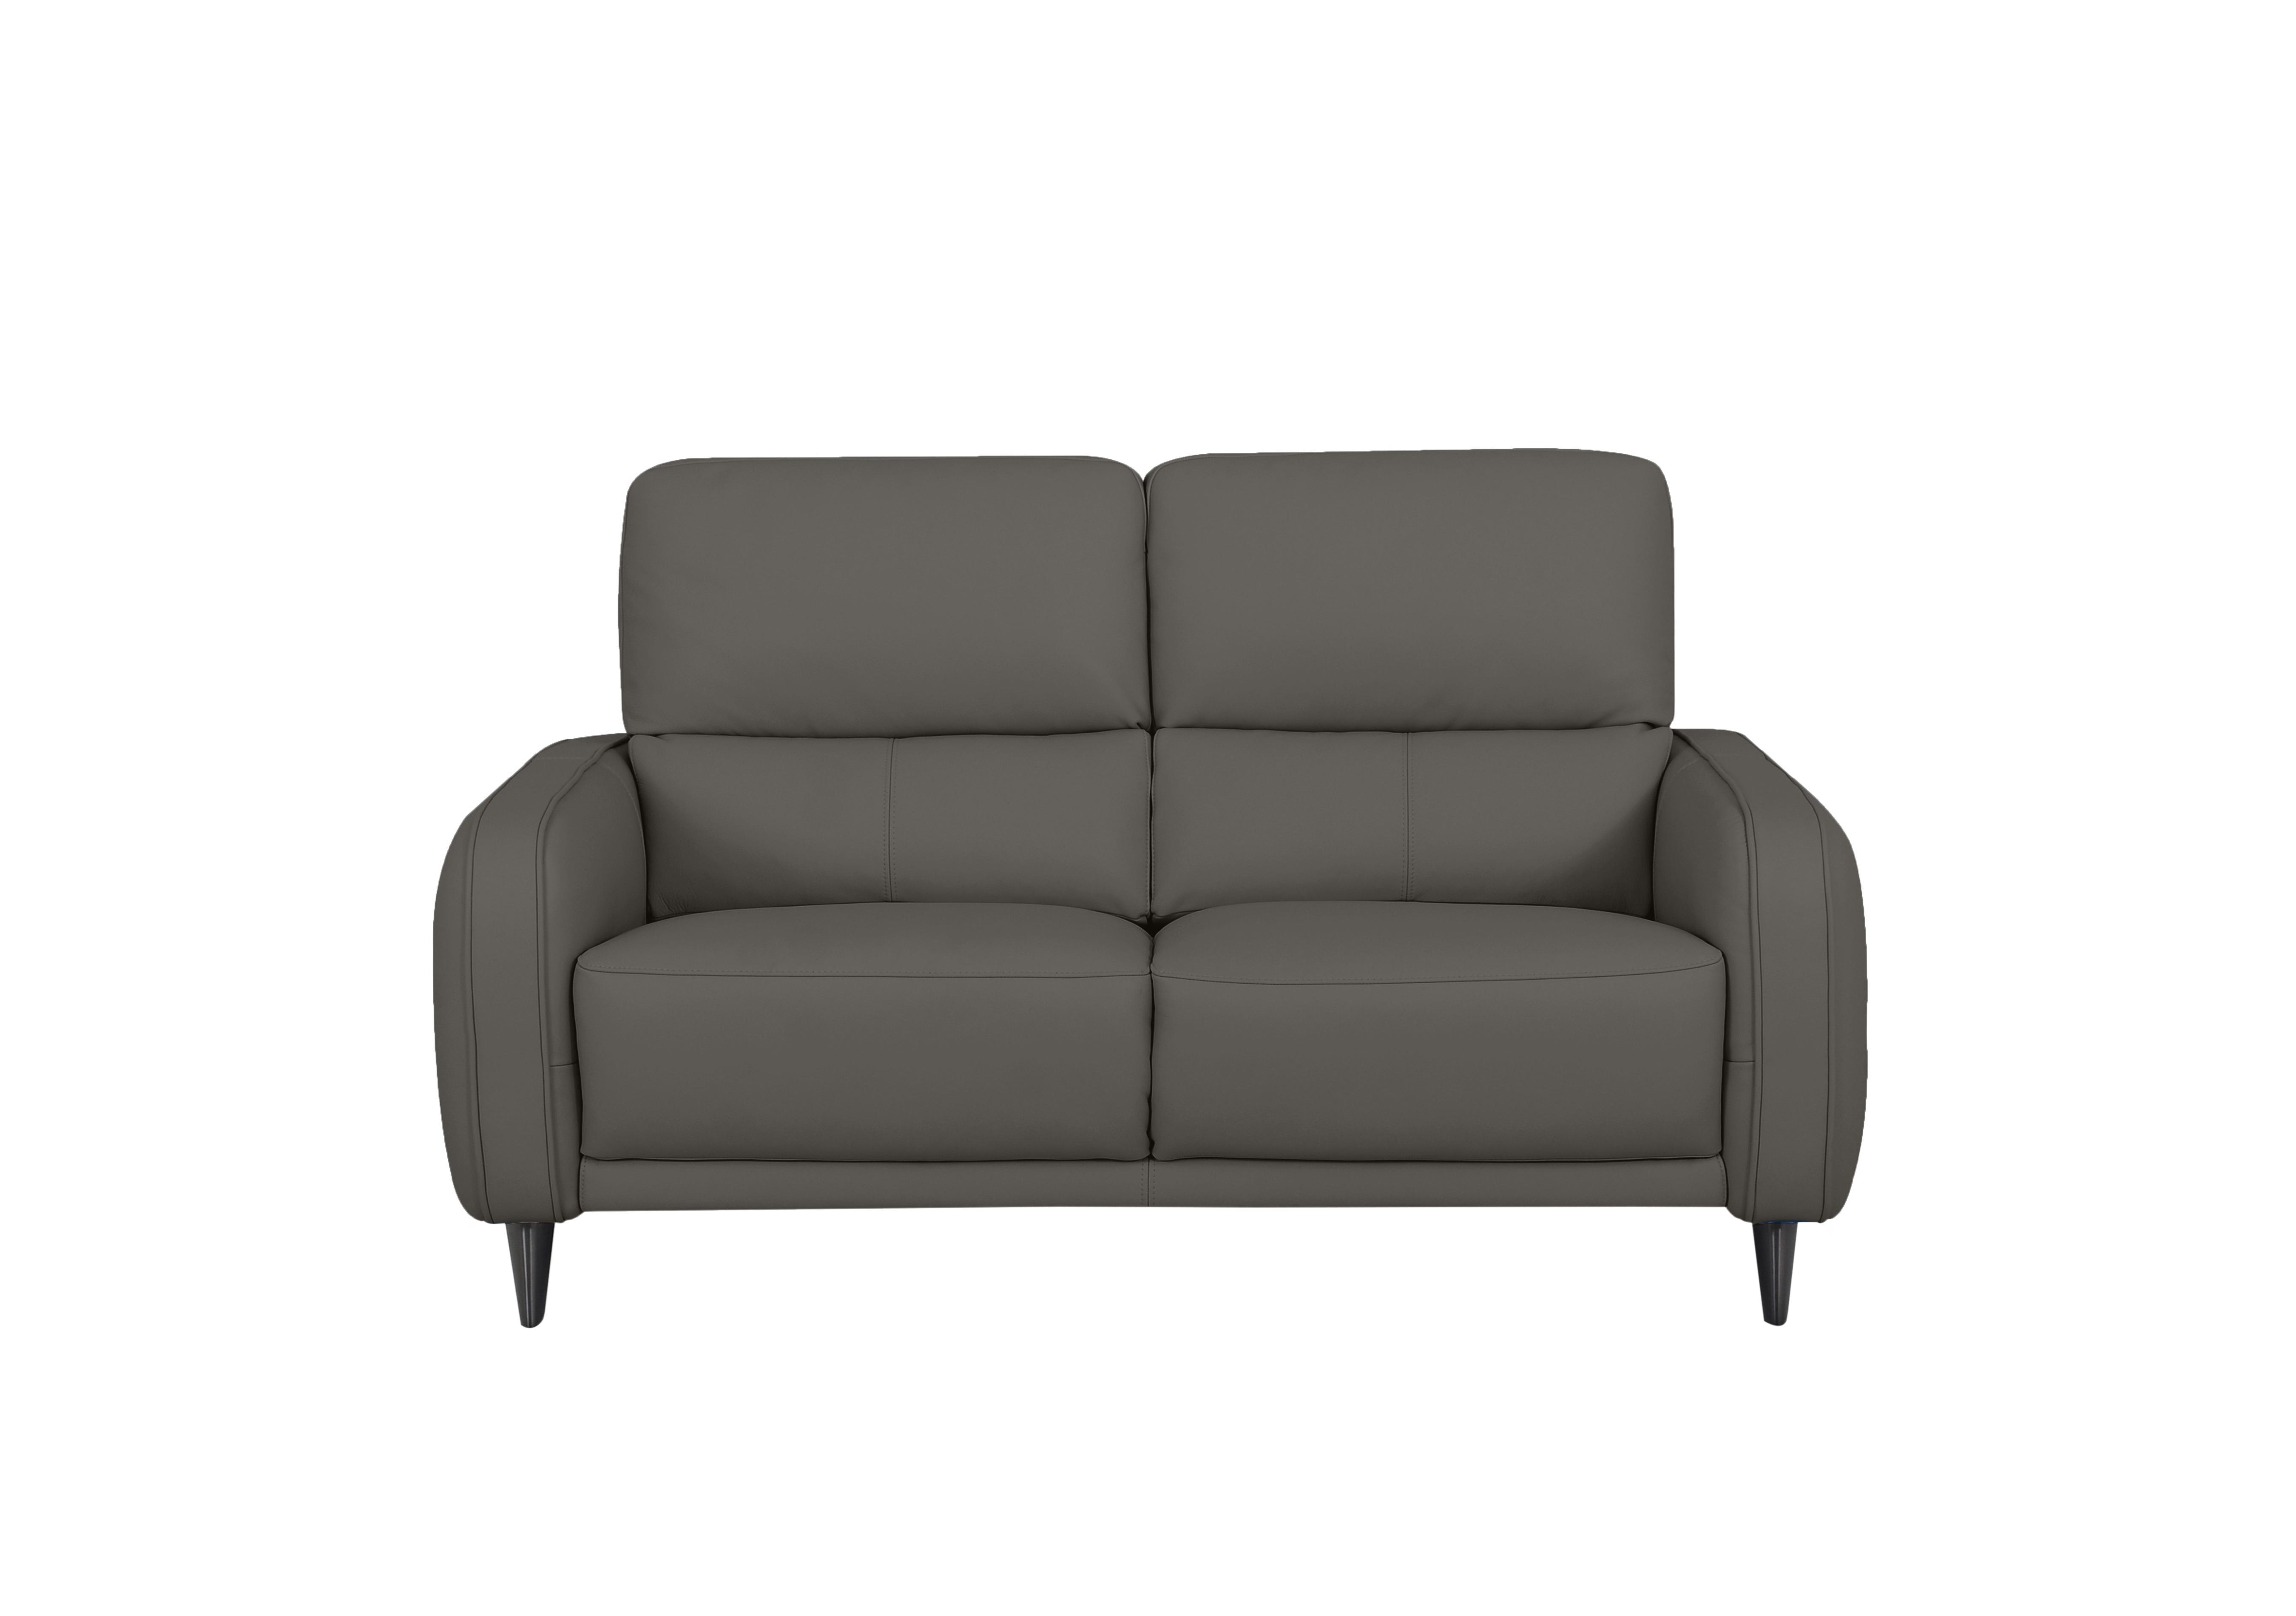 Logan 2.5 Seater Leather Sofa in Nn-515e Elephant Grey on Furniture Village